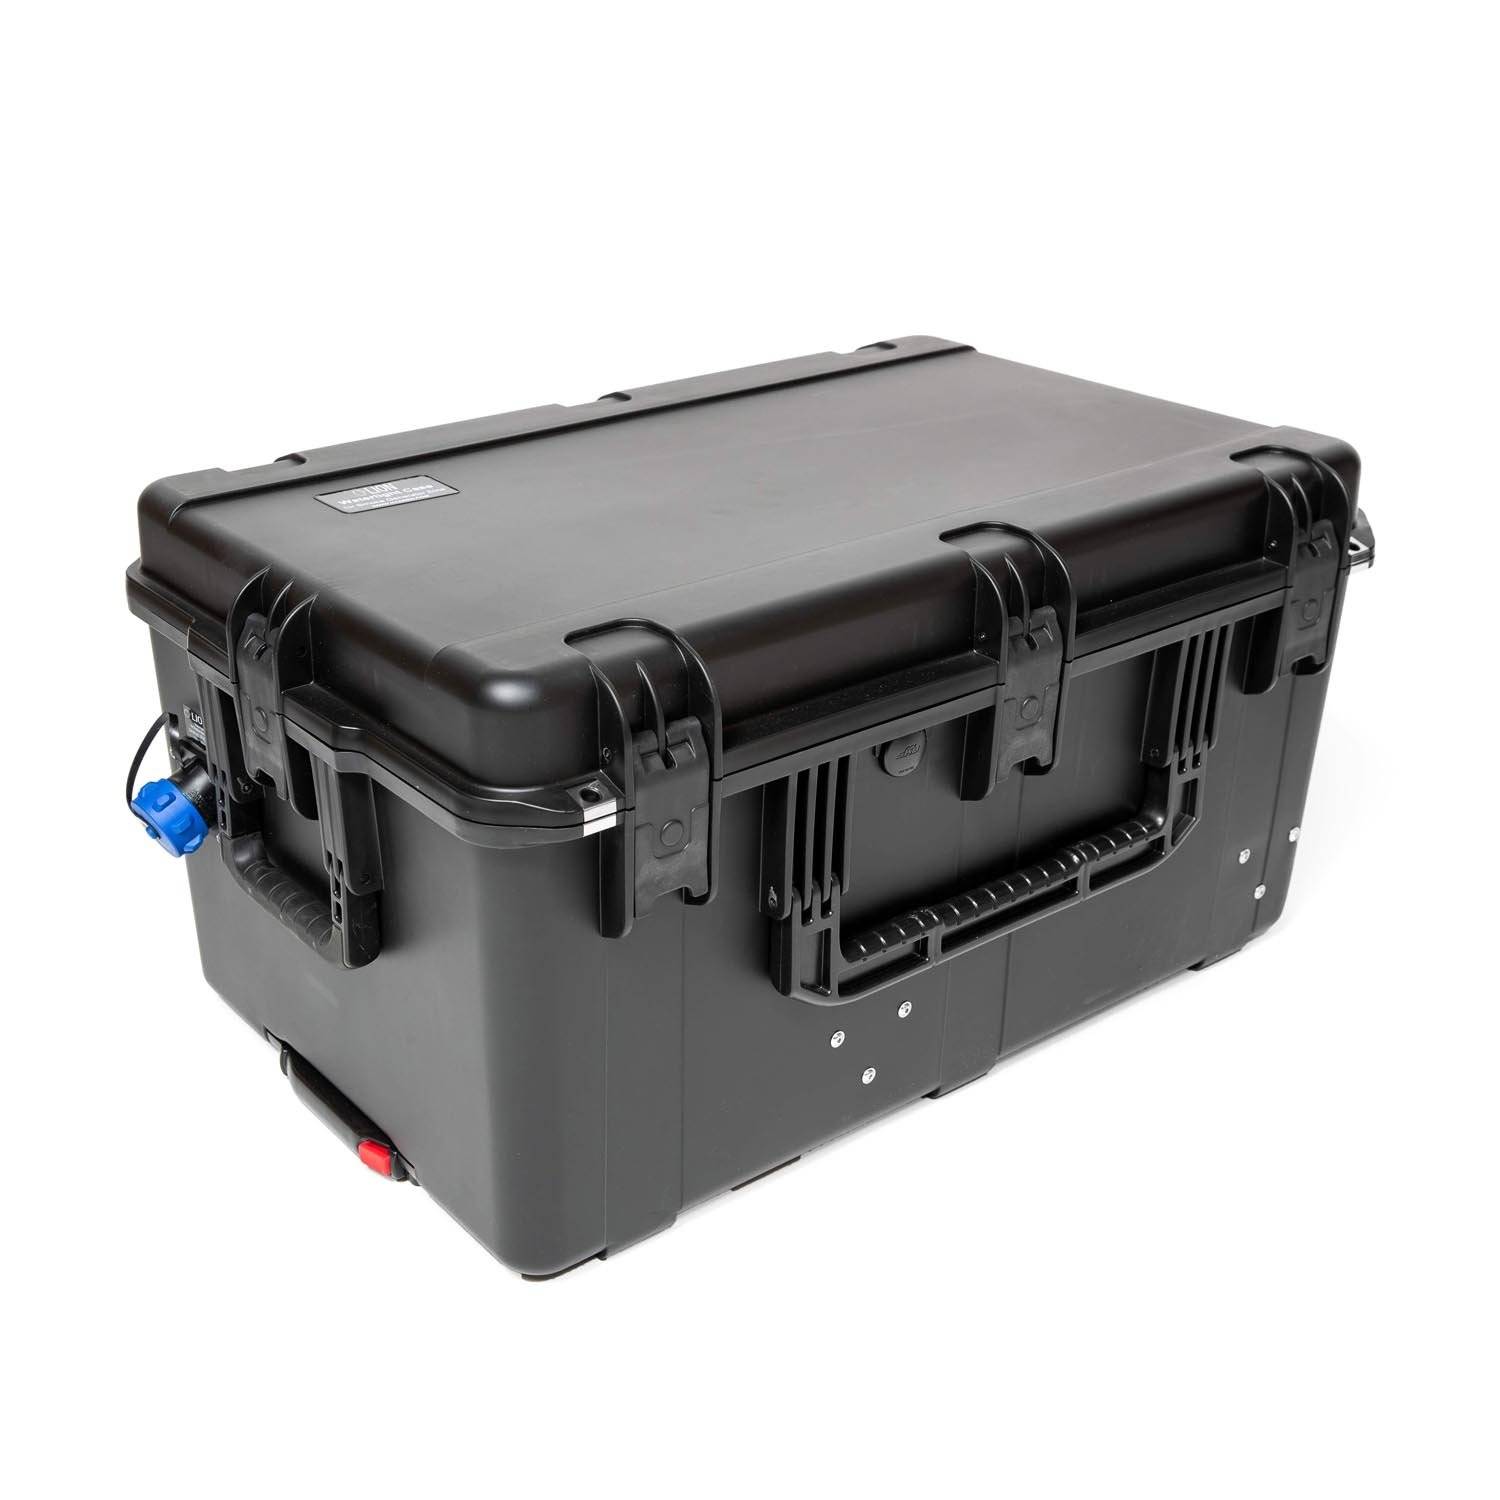 LION SG4000 Smoke Generator Waterproof Case